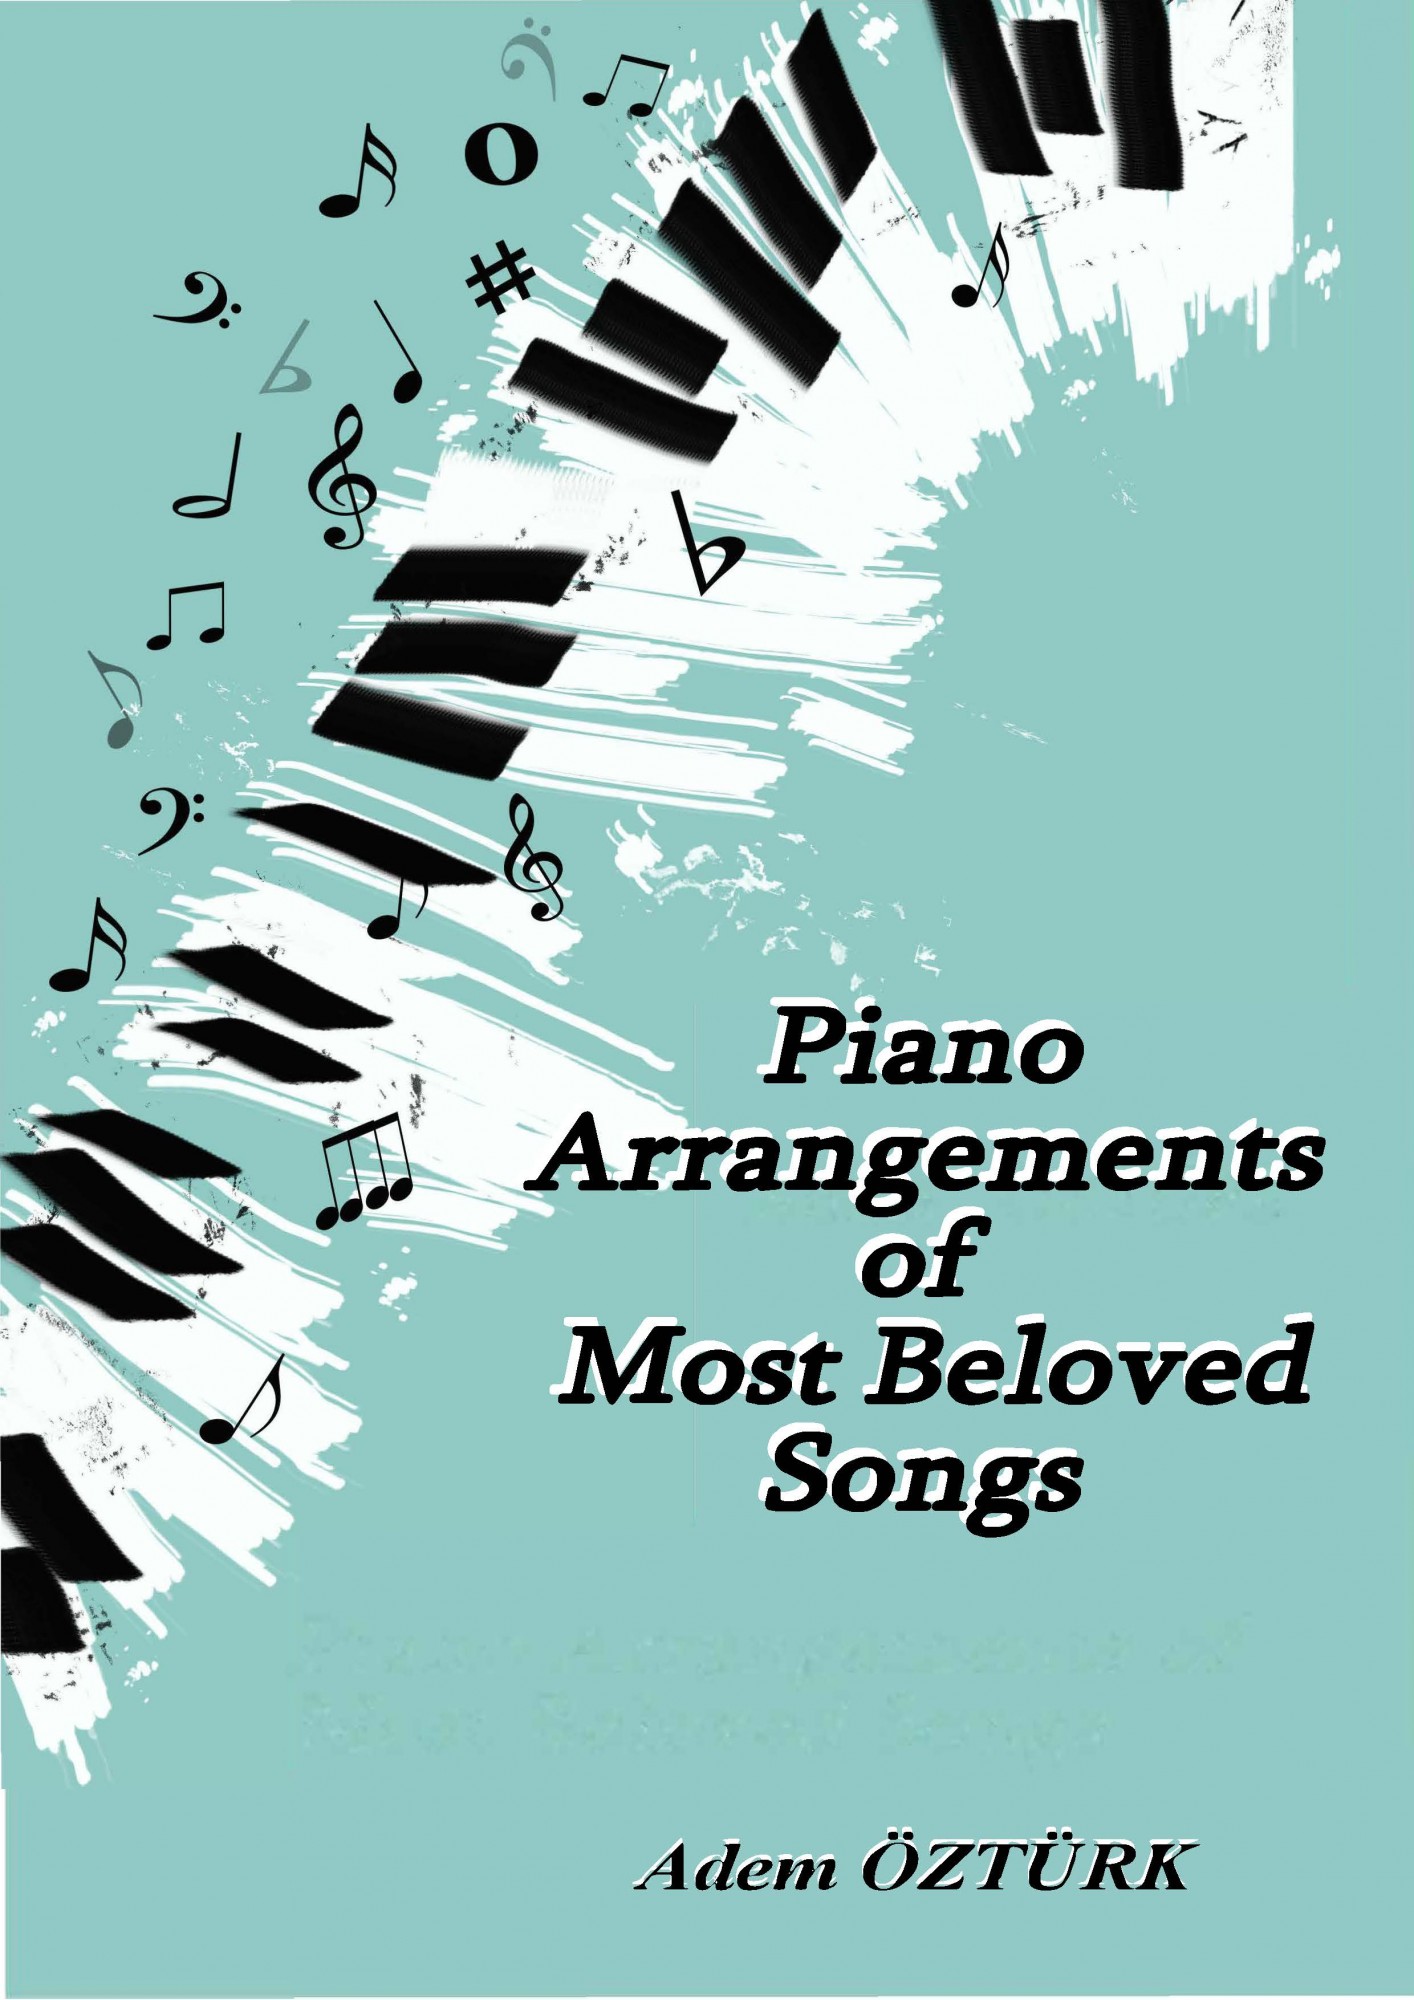 Piano Arrangements of Most Beloved Songs